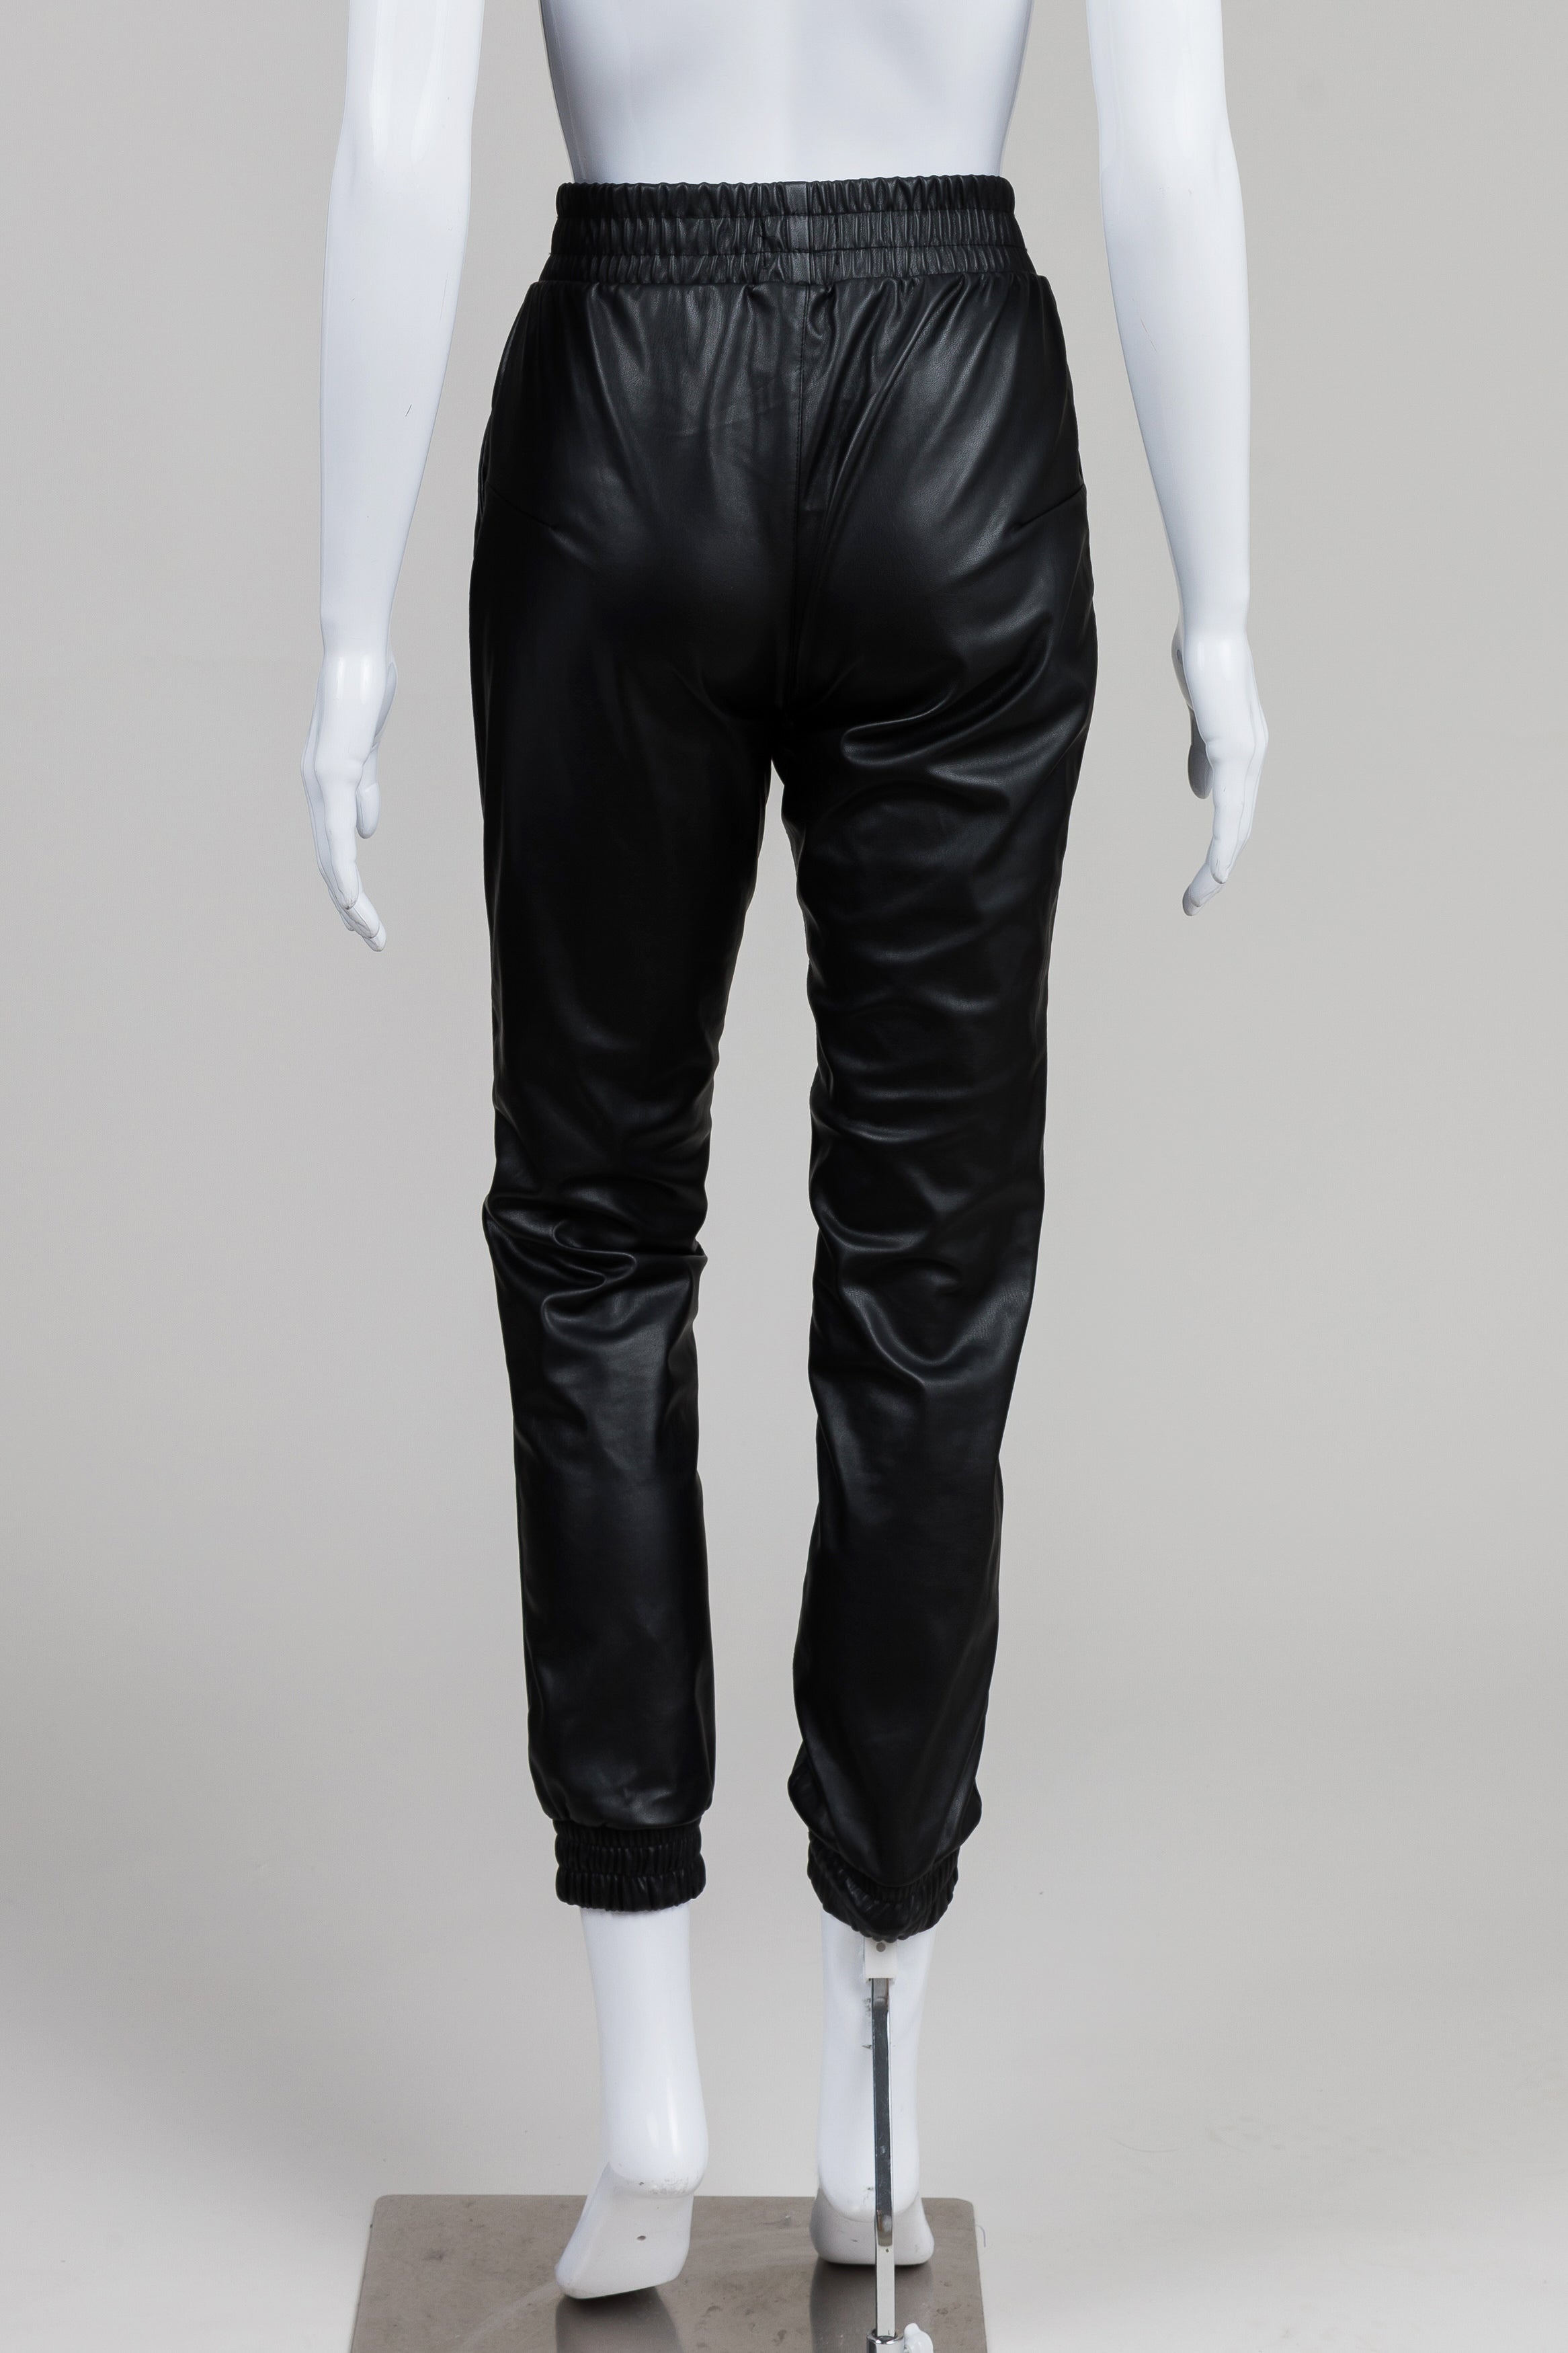 Hudson black faux leather jogger pant (XS)